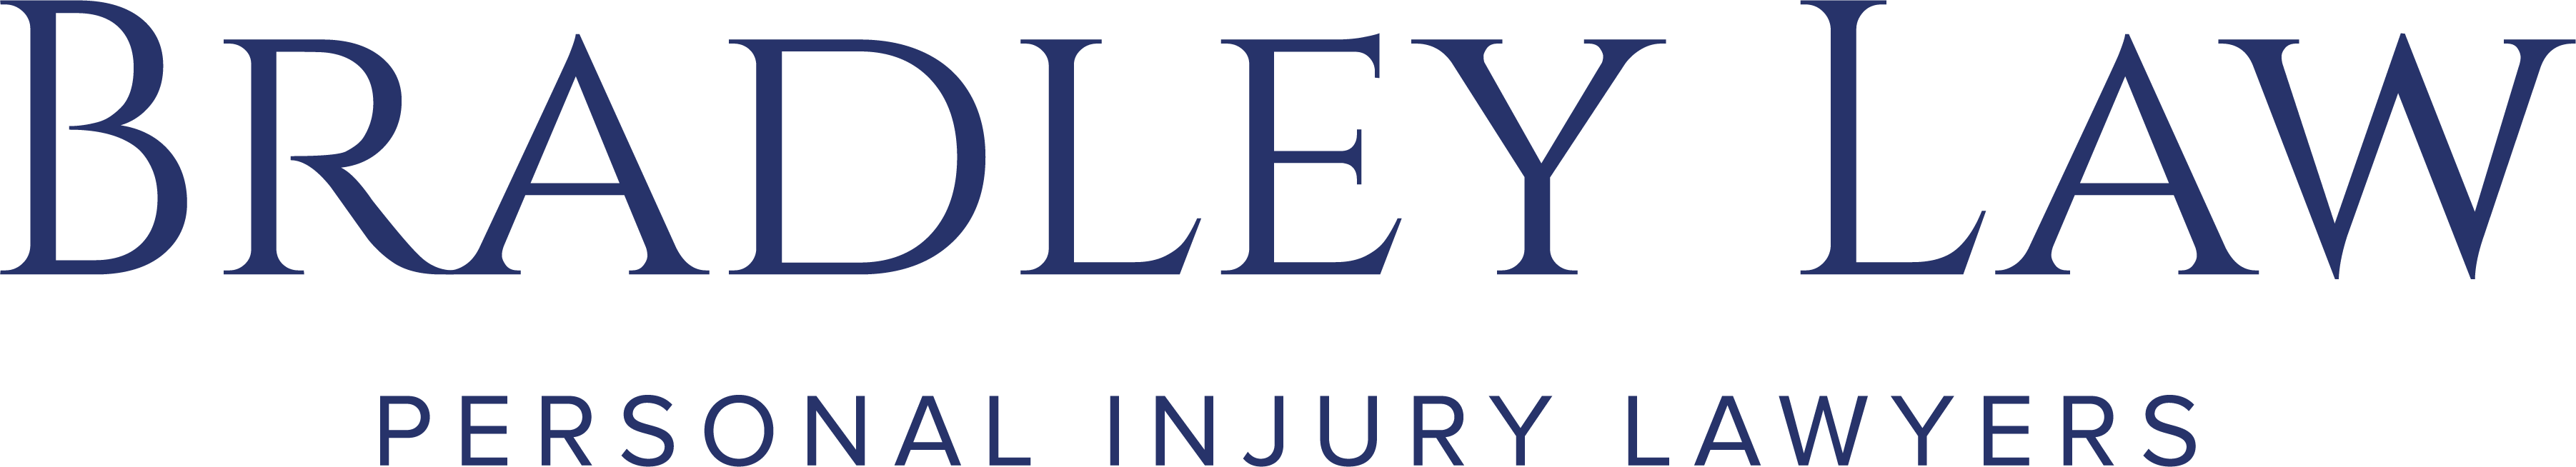 Bradley Law Personal Injury Lawyers- Kansas City review